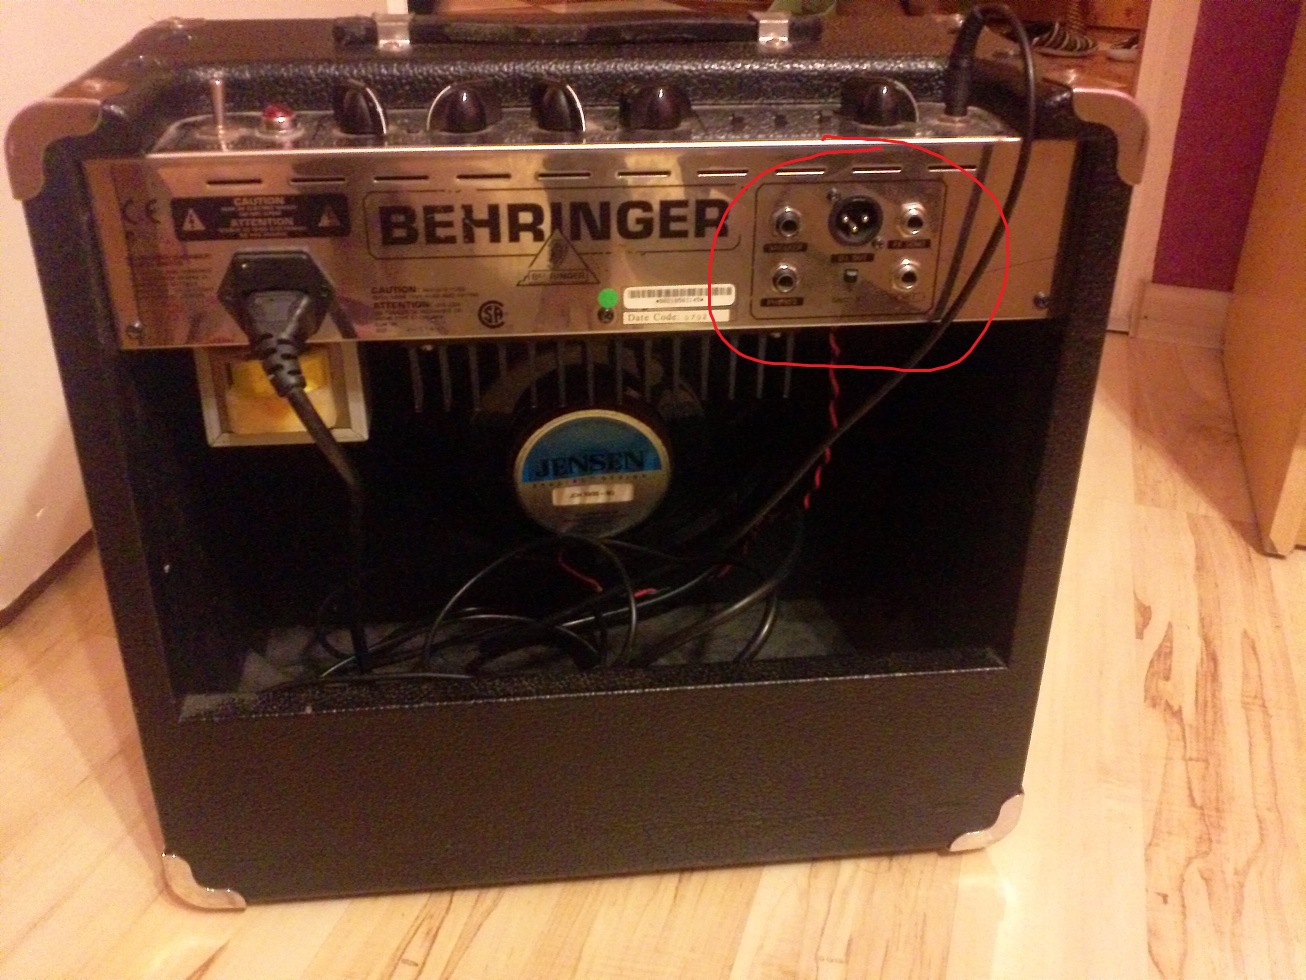 behringer vintager gm110 nie działa tylny panel, brak